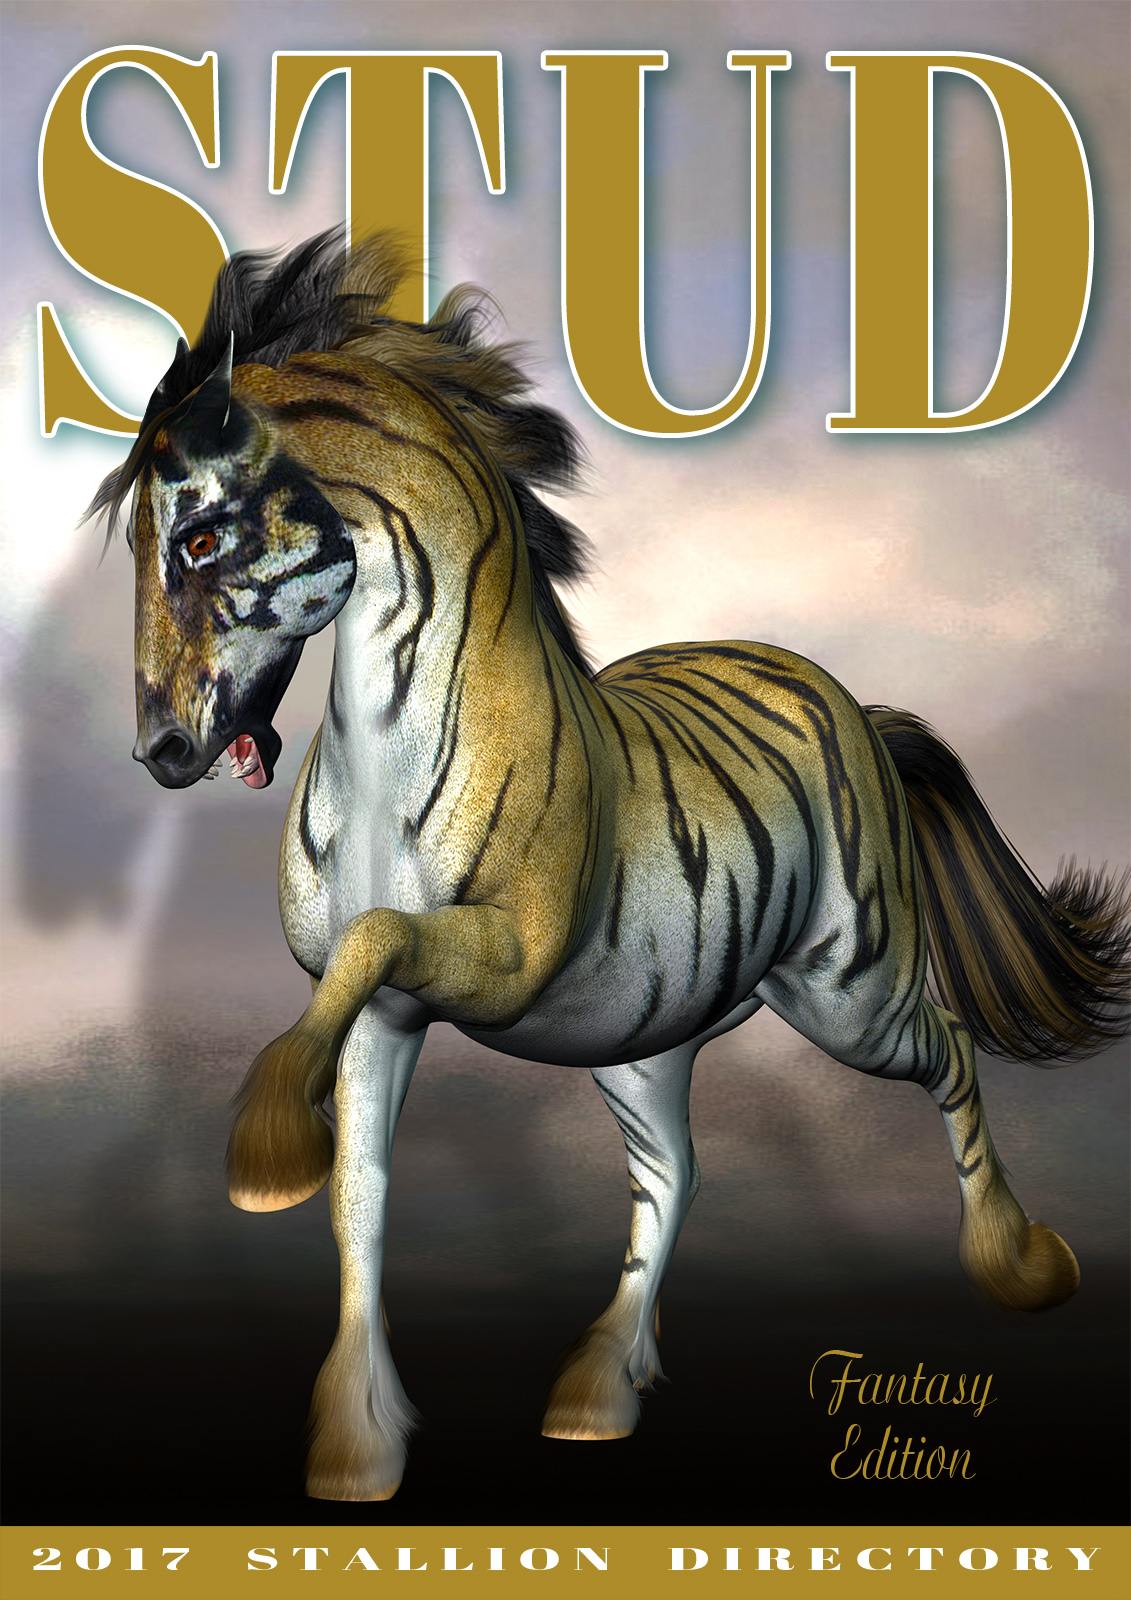 Magazine Cover - Stallion Directory - Fantasy Edition